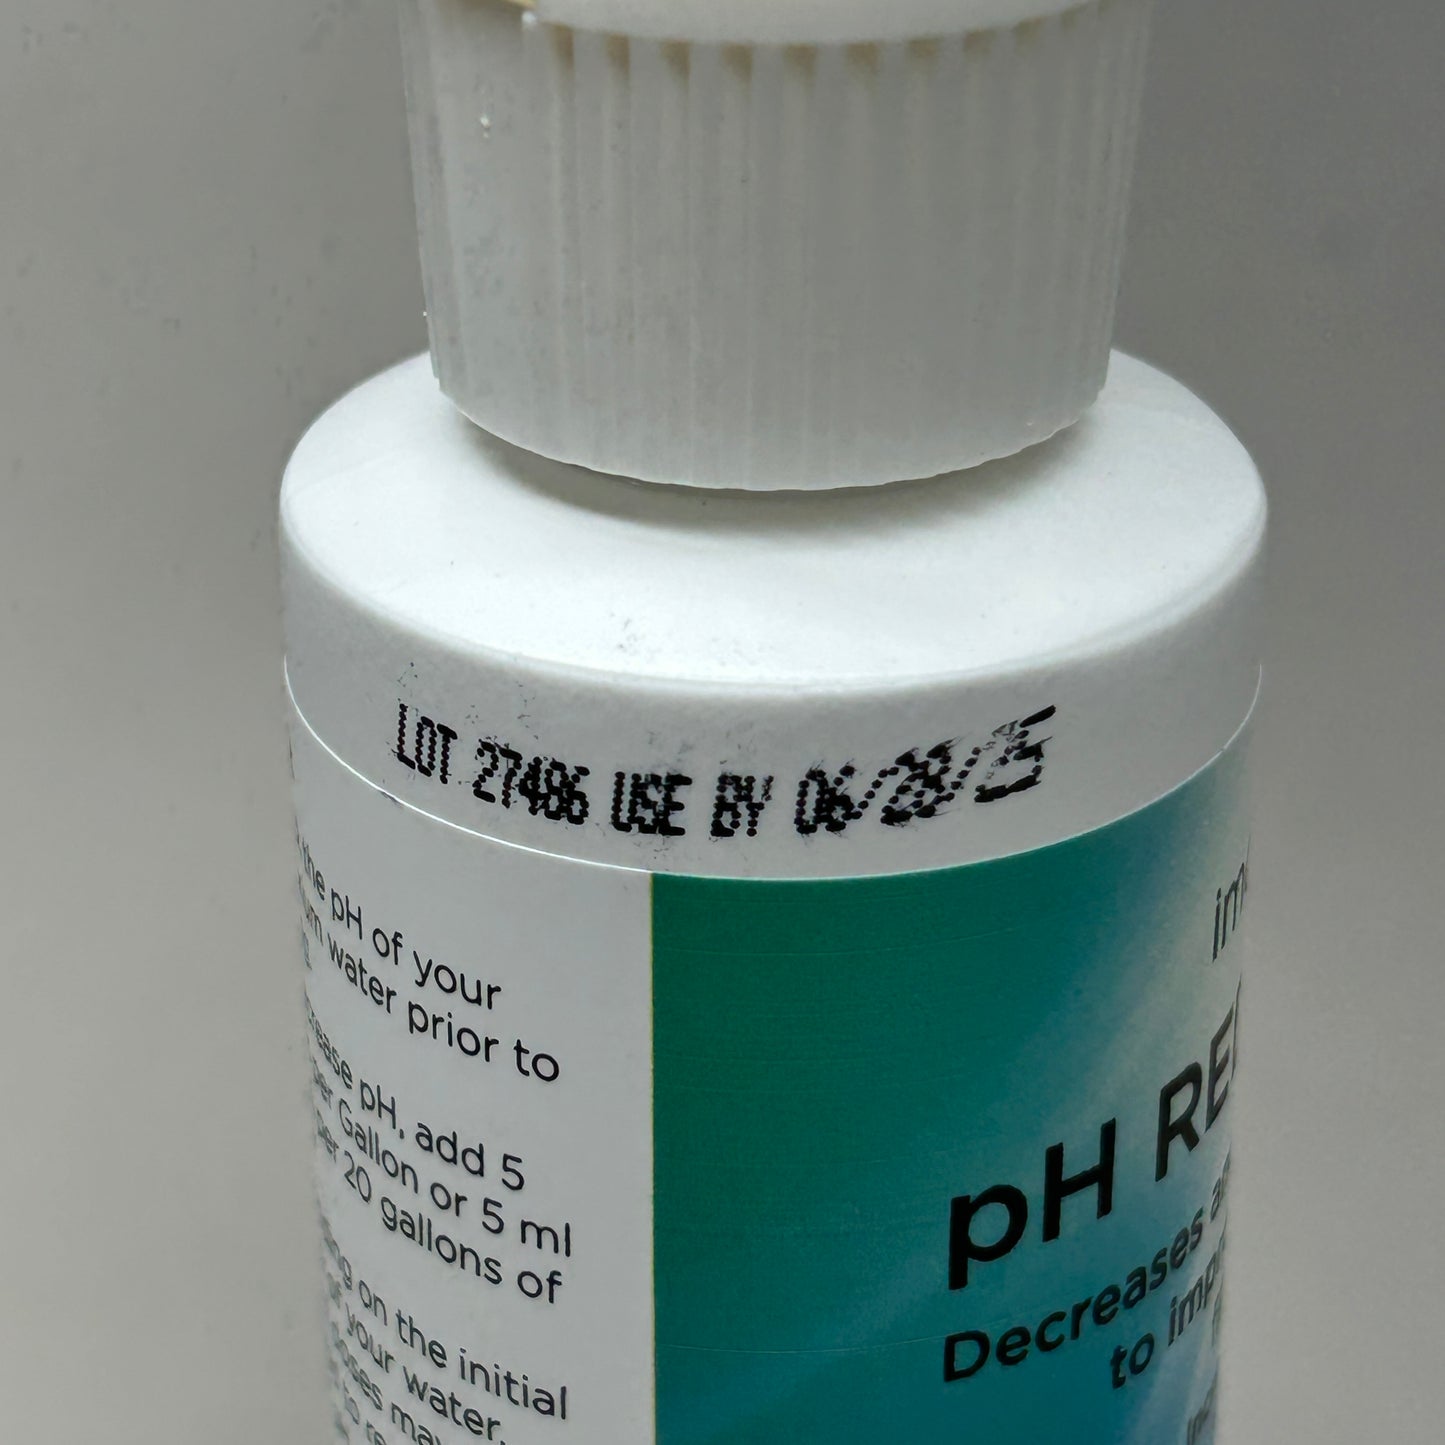 IMAGITARIUM pH Reducer Phosphate Free Freshwater and Saltwater 4 fl oz 06/25 (New)